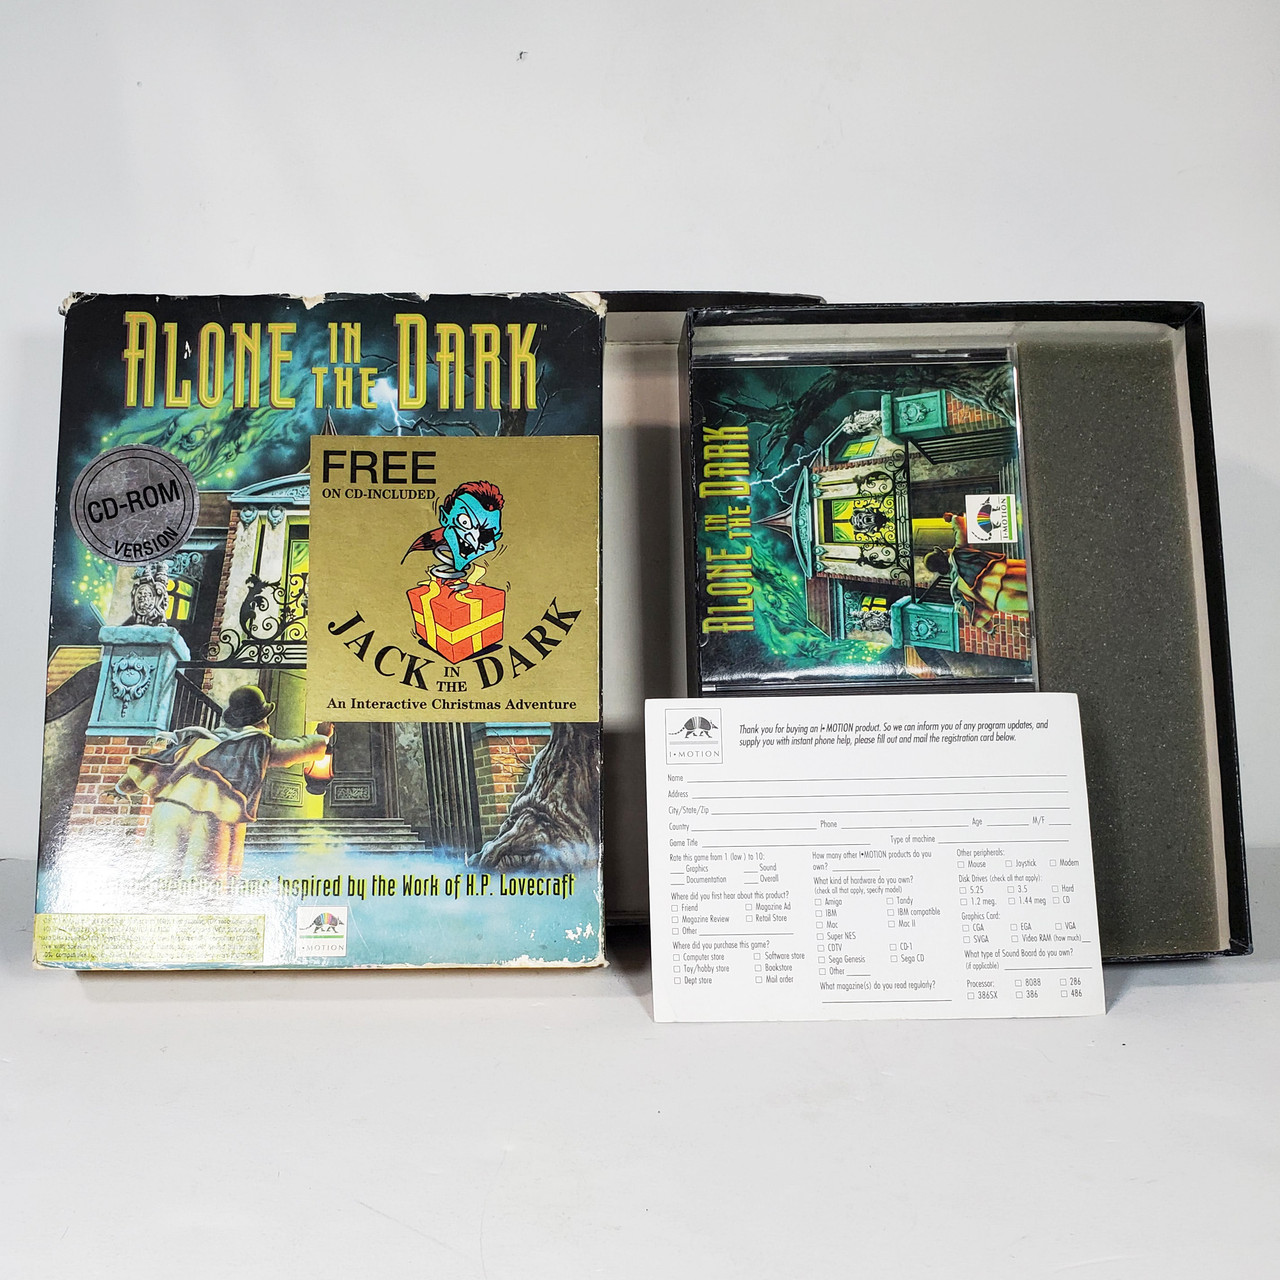 Vintage 1993 Alone in the Dark 1 PC Game (CD-ROM)